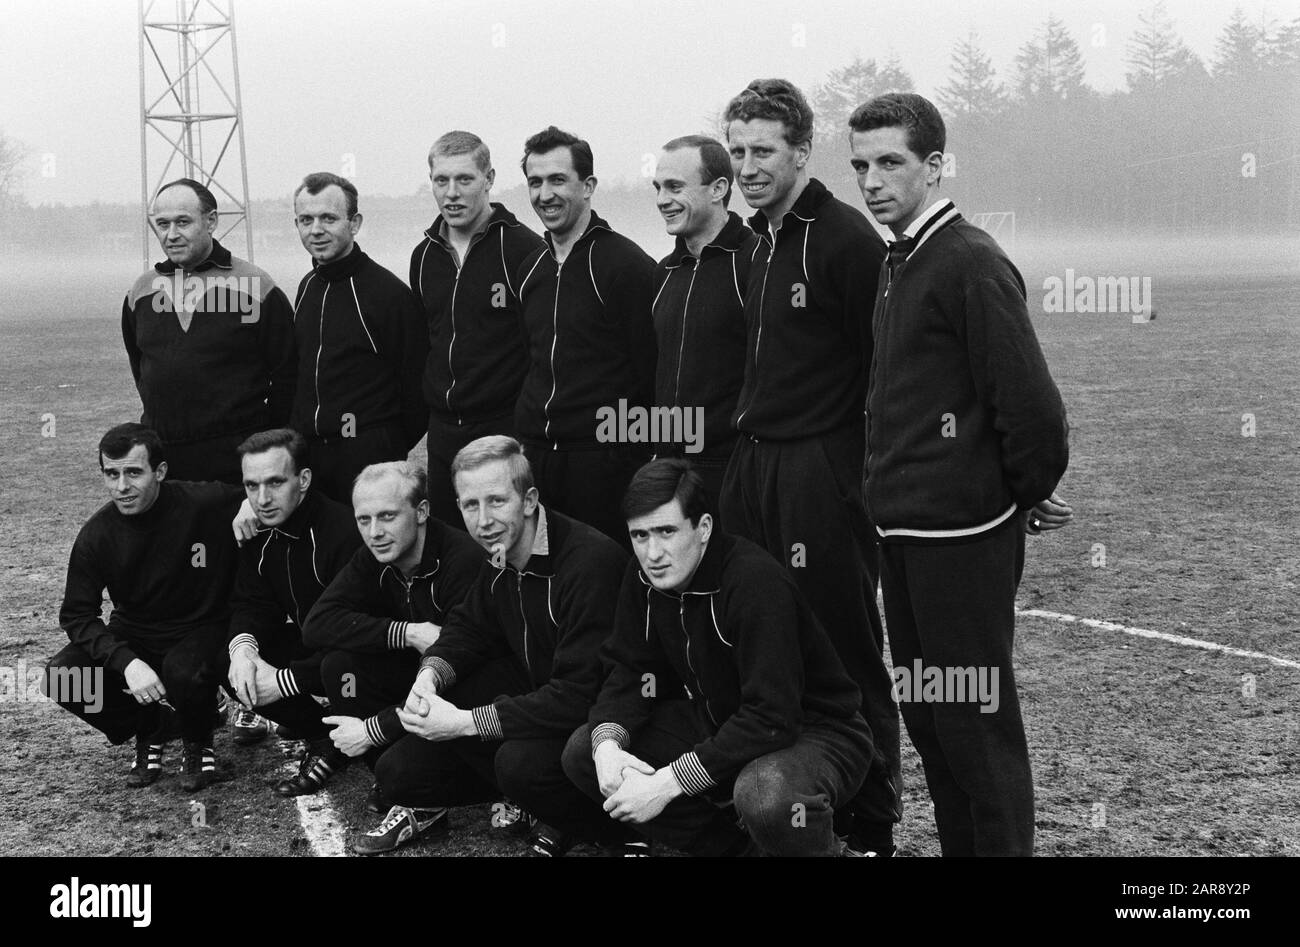 Training Dutch team at Zeist, the team Date: 27 march 1963 Location: Utrecht, Zeist Keywords: teams, sports, soccer Institution name: Dutch team Stock Photo